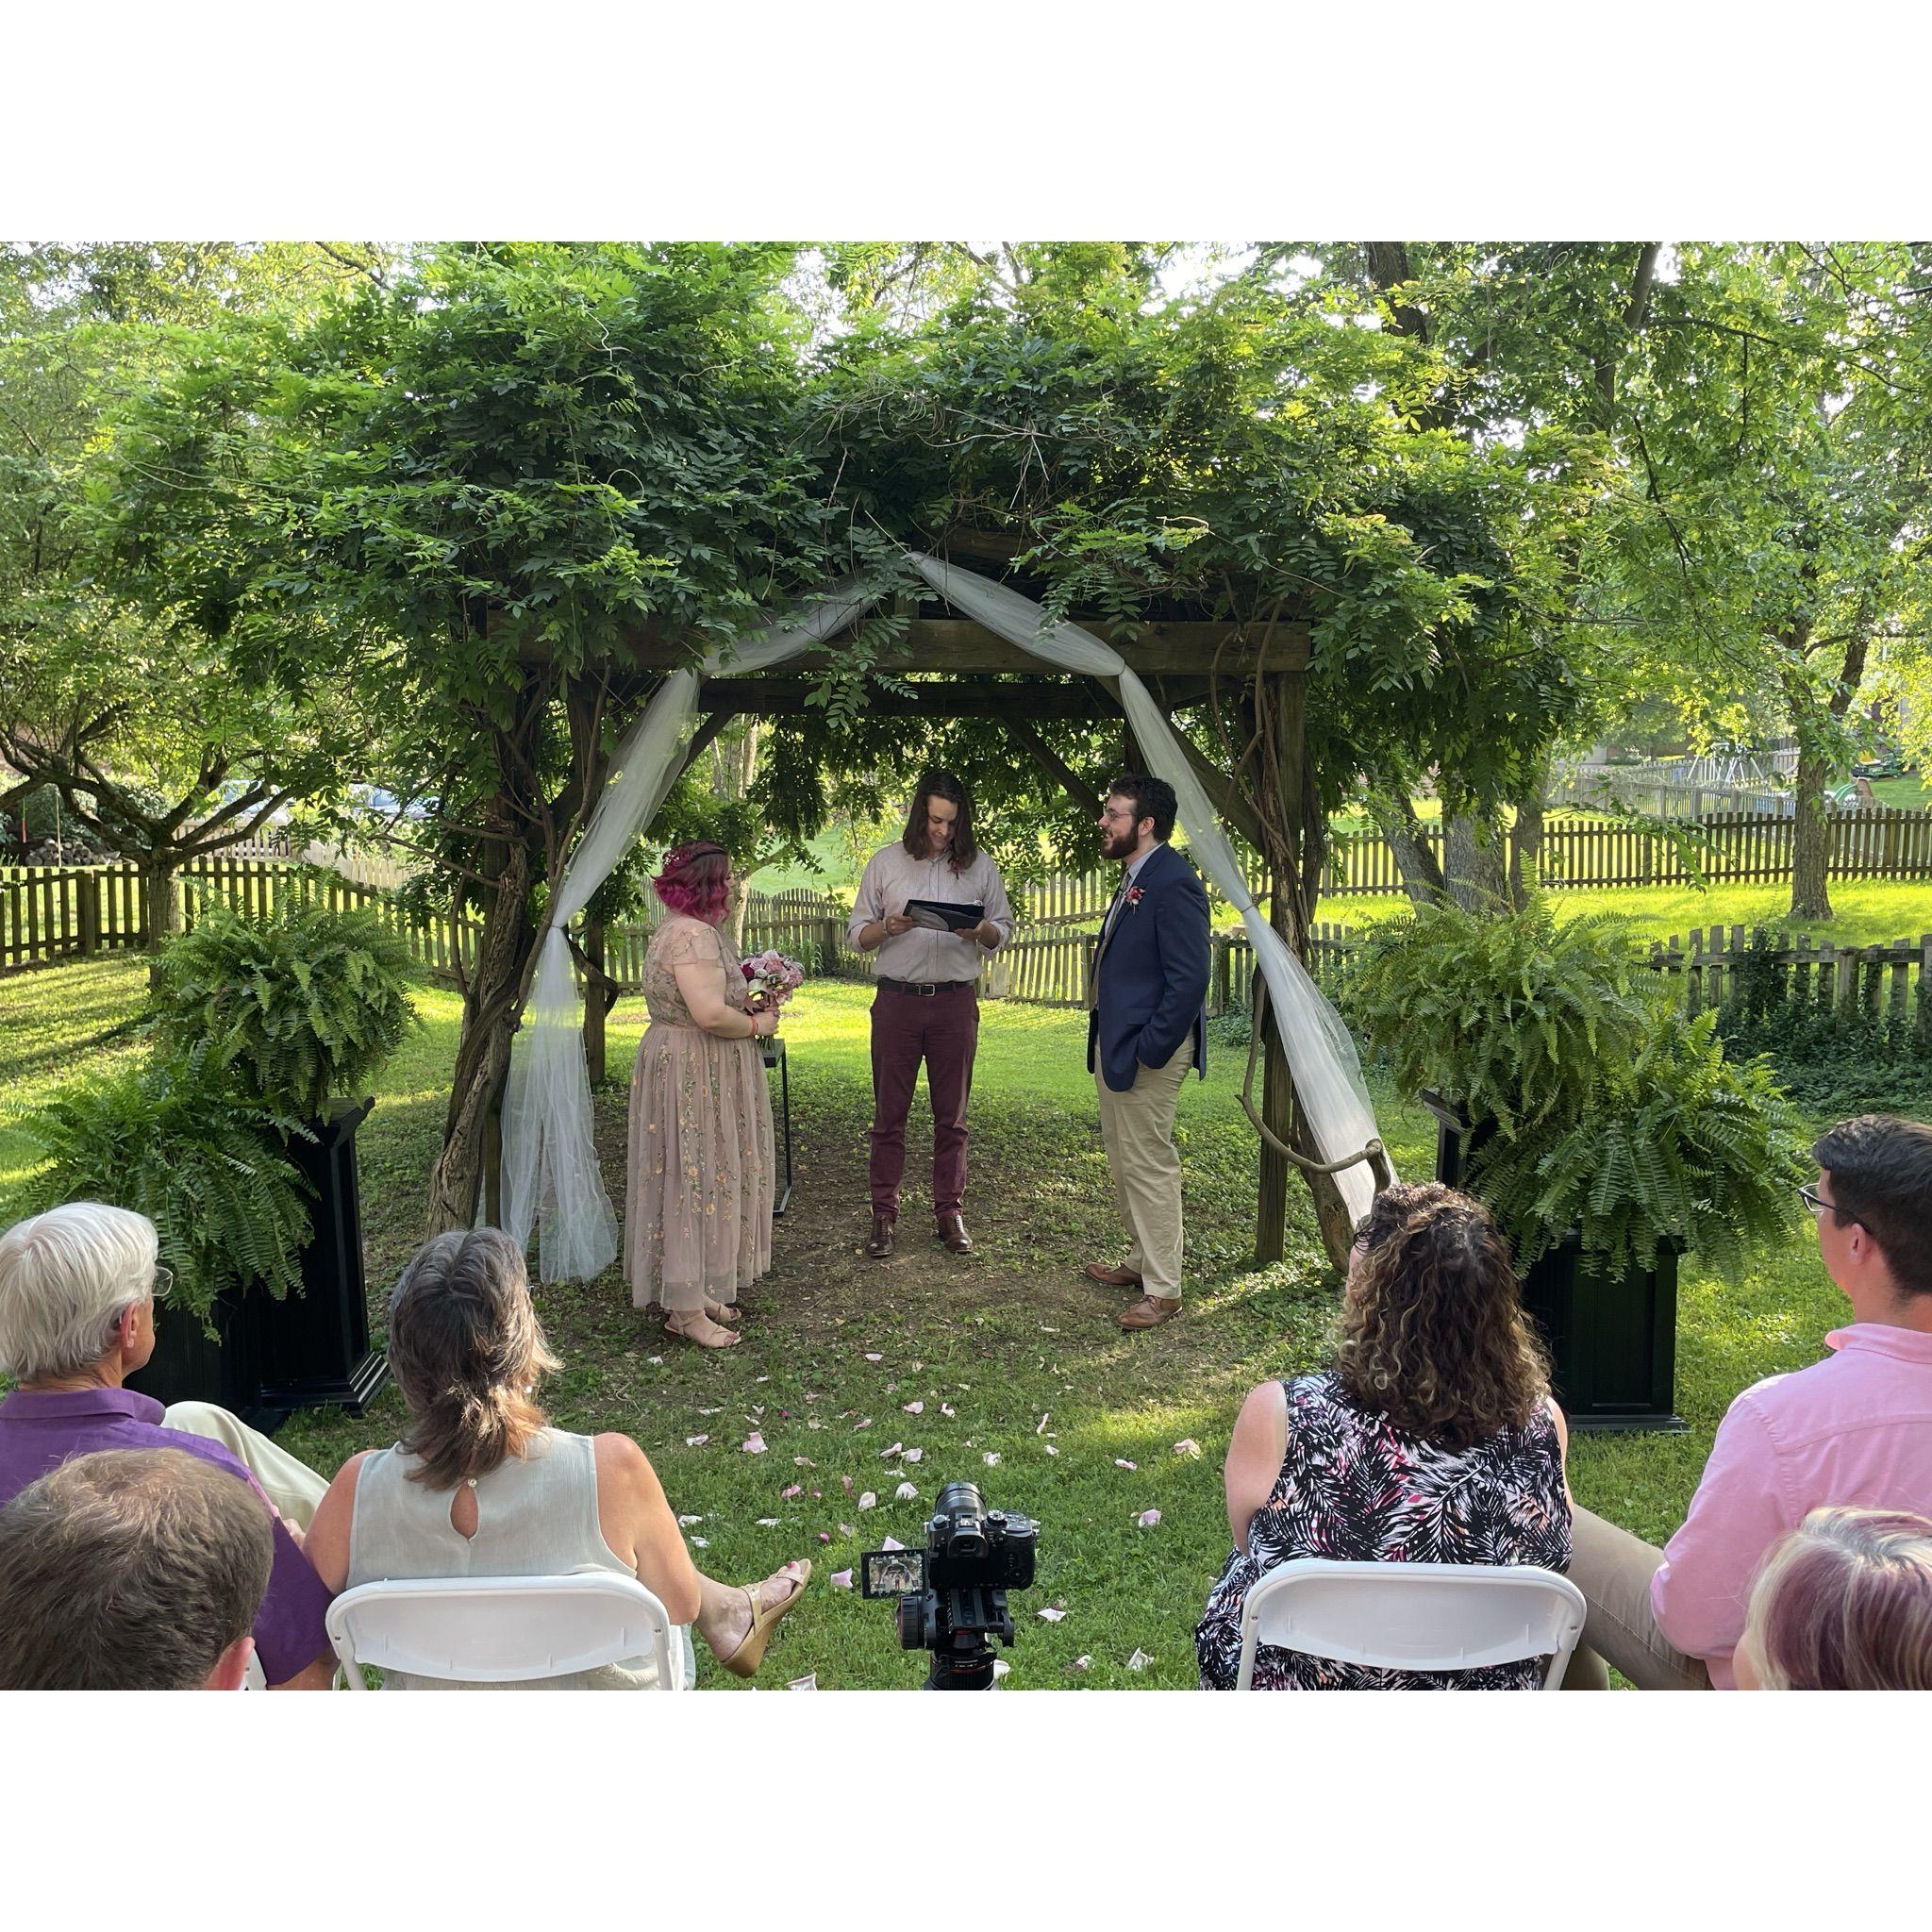 Our backyard wedding, June 2021